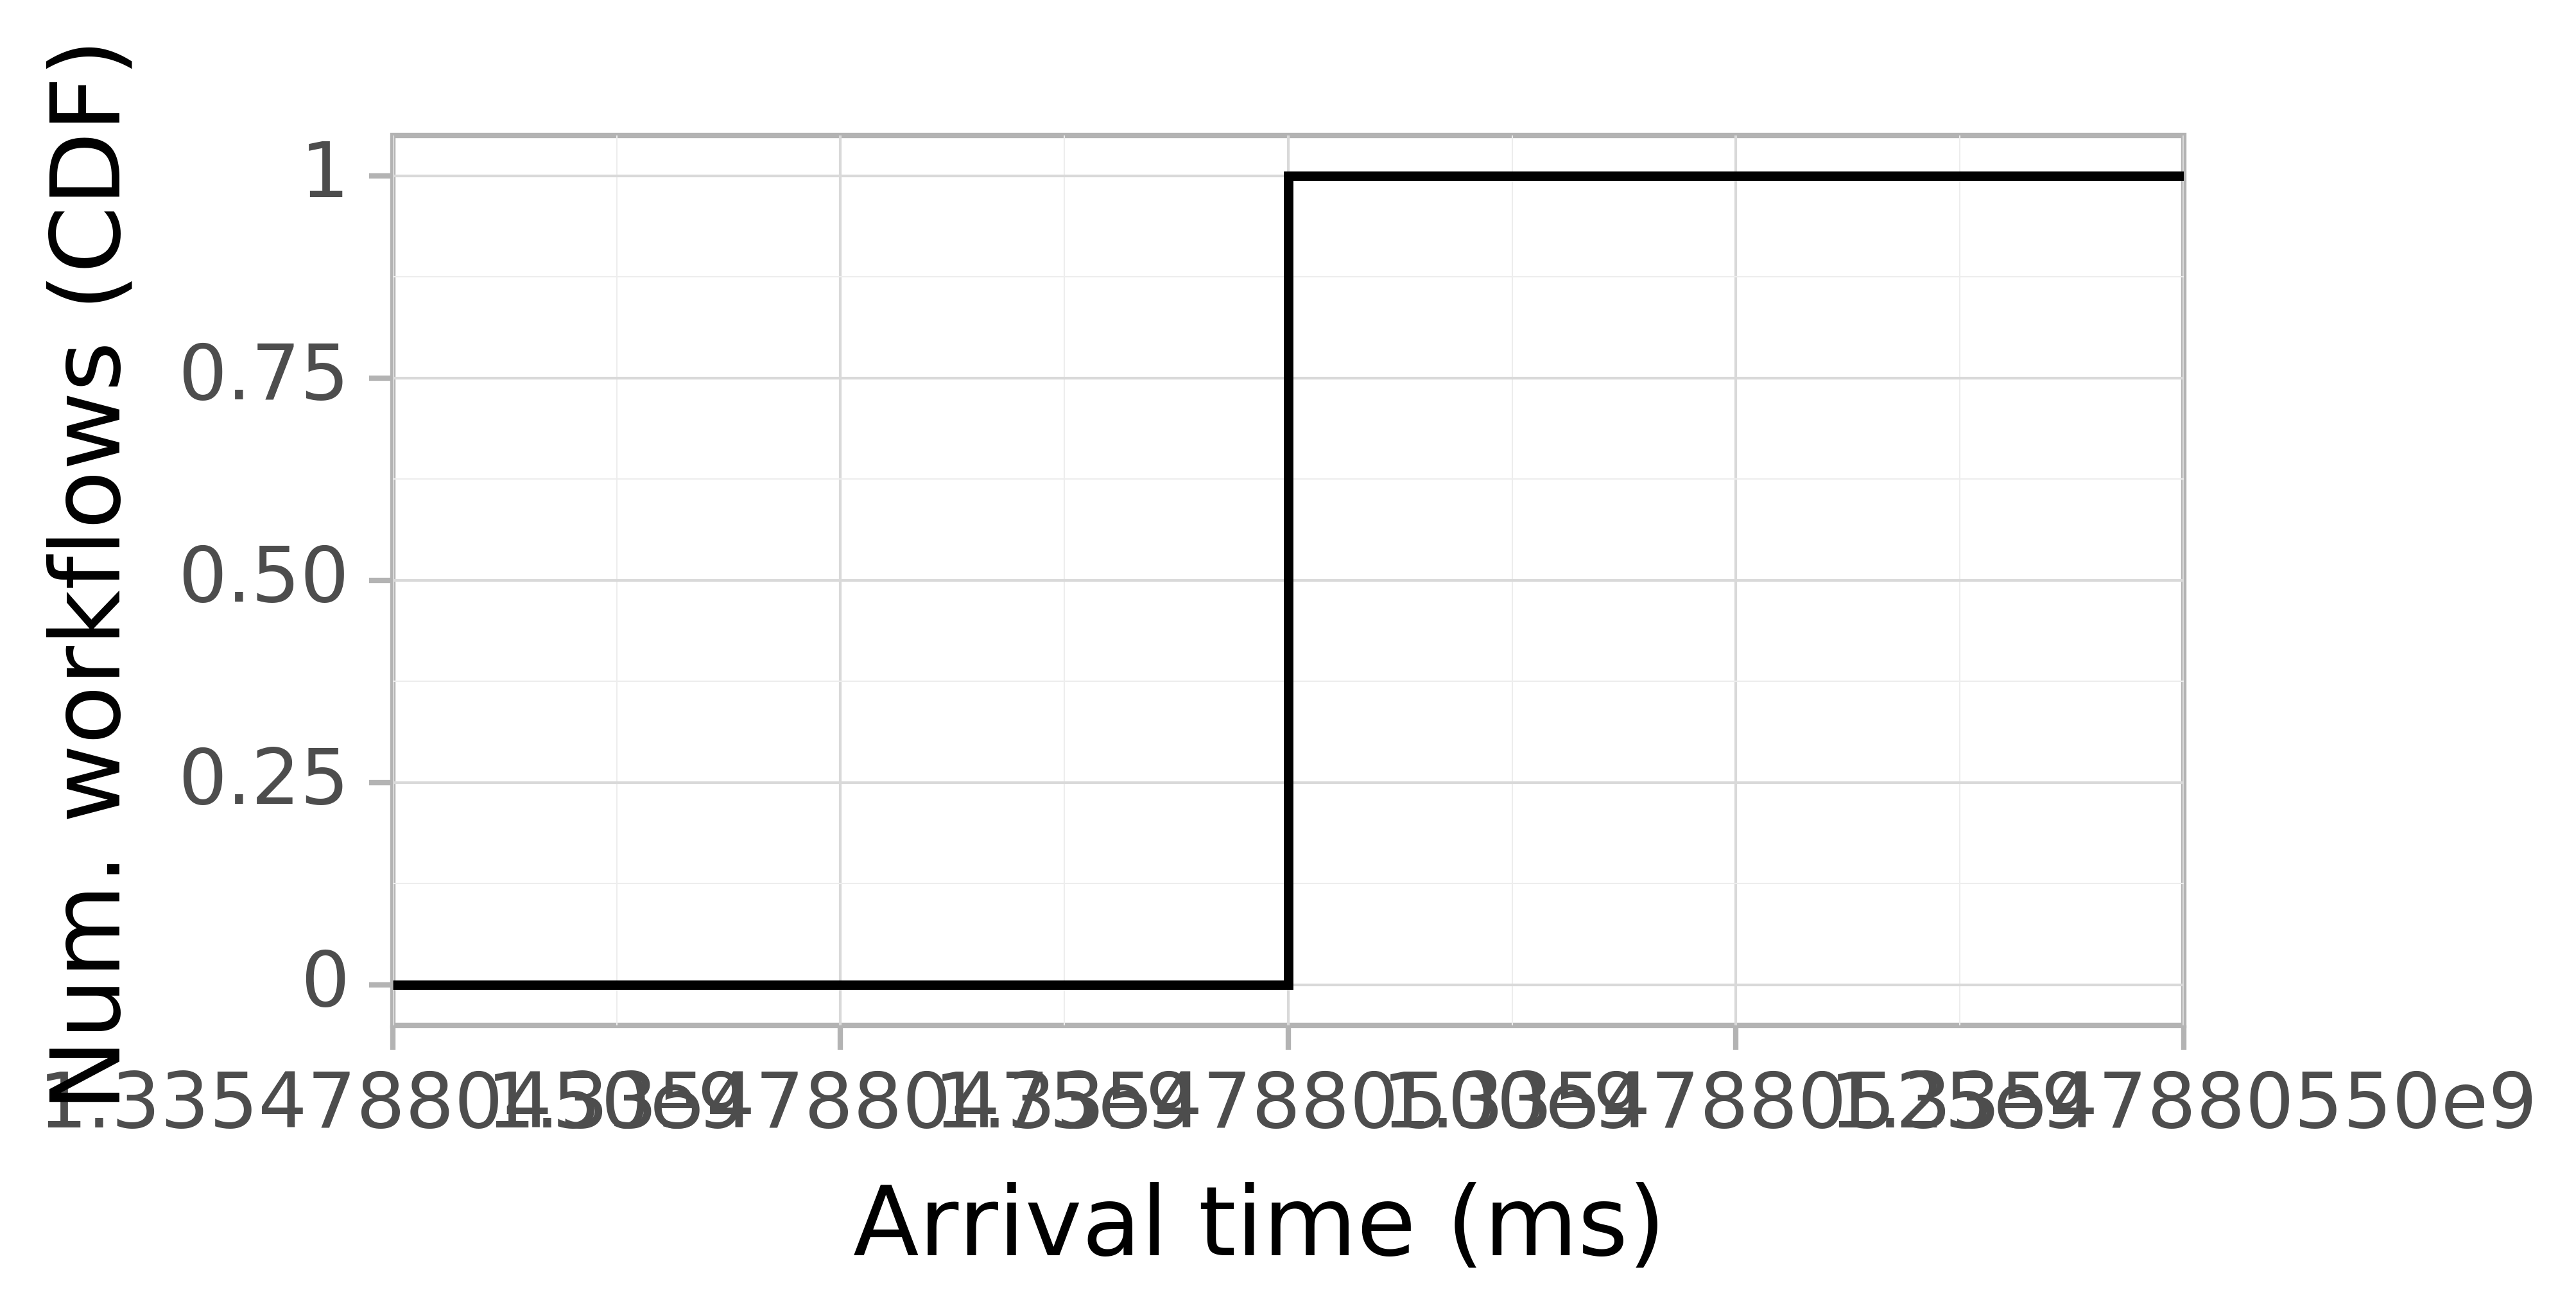 Job arrival CDF graph for the Pegasus_P6b trace.